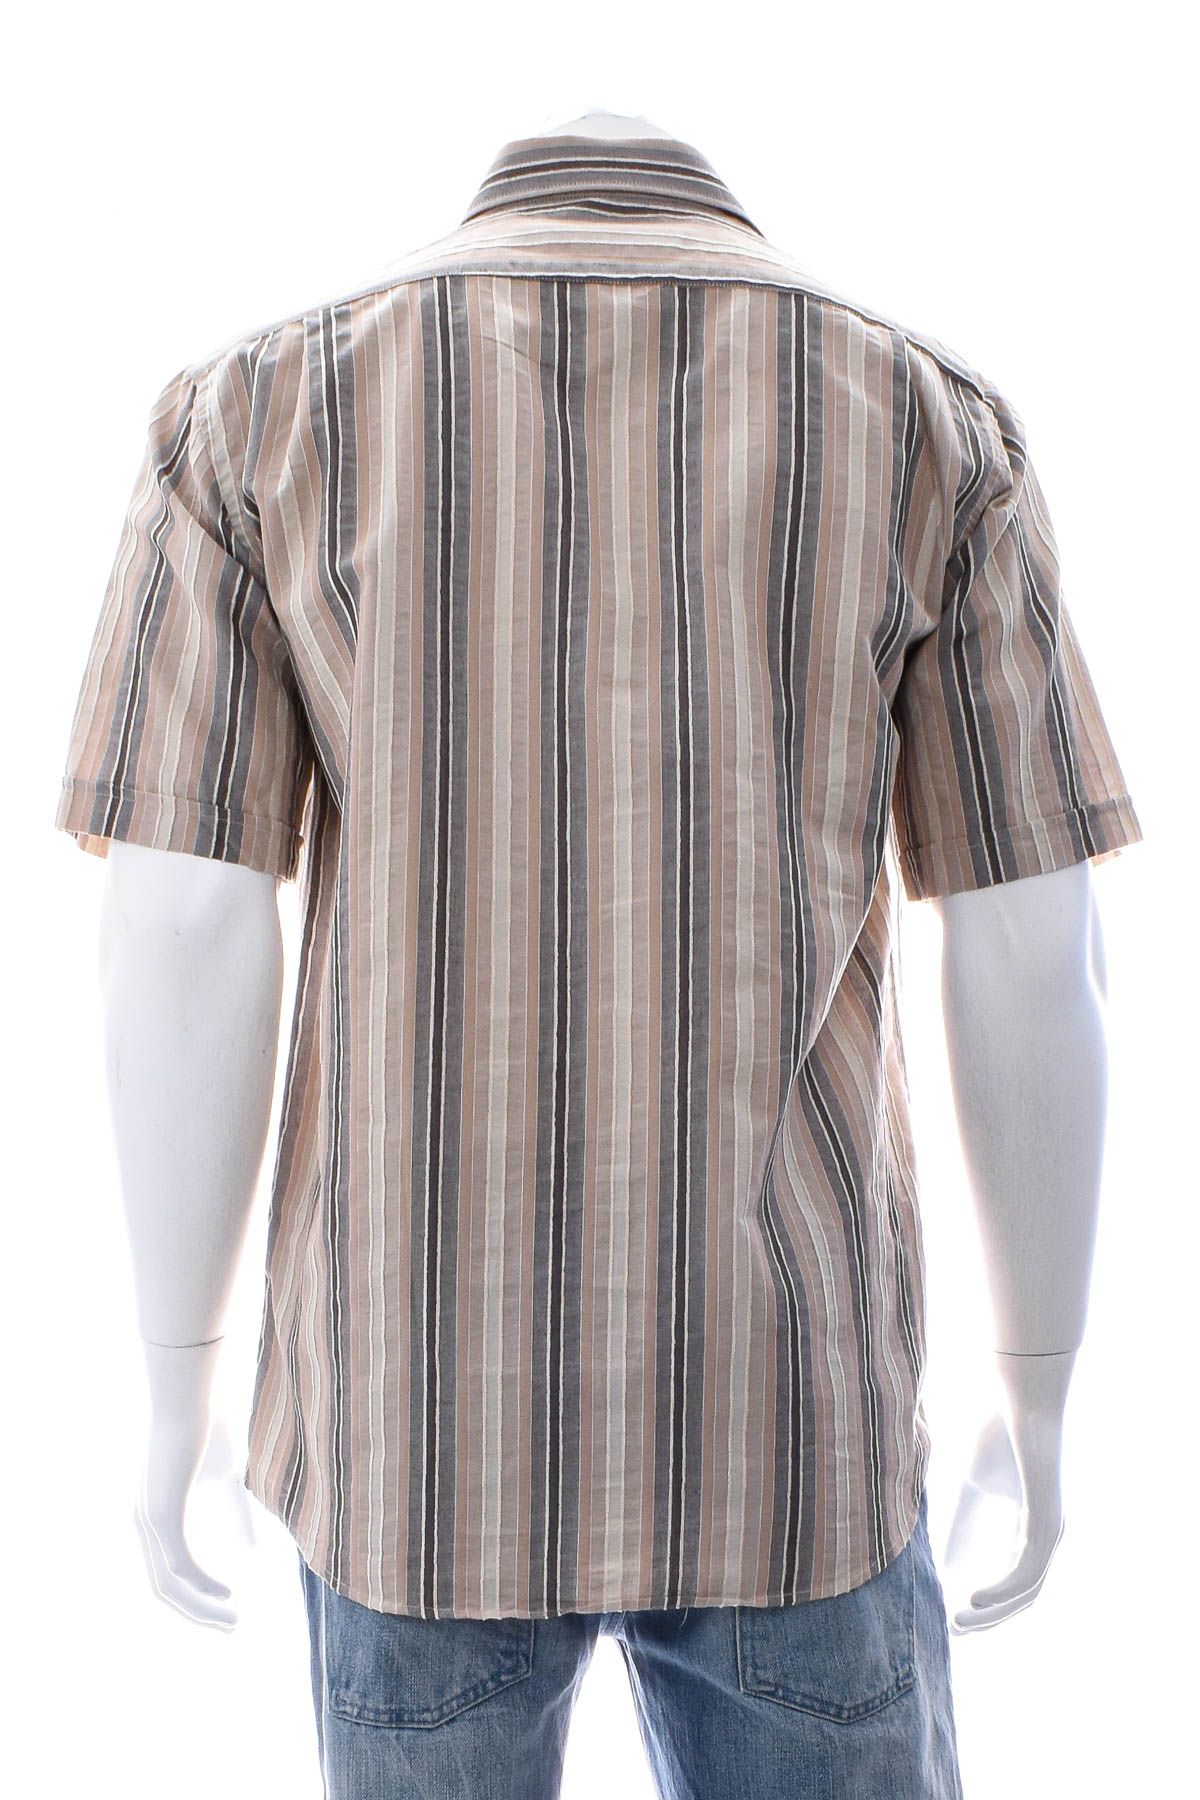 Men's shirt - Dubbin & Hollinshead - 1